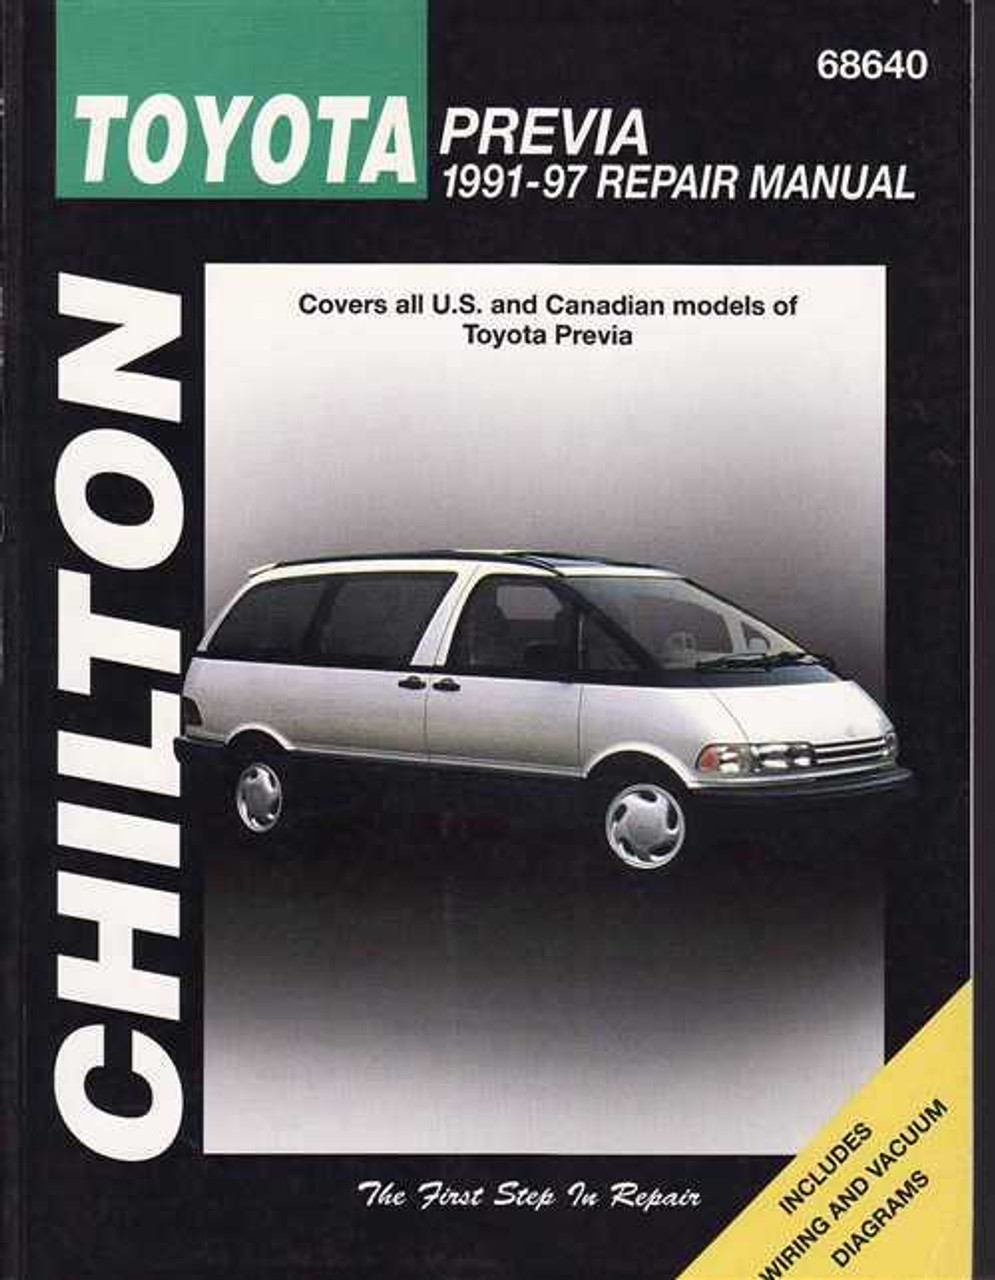 Toyota Tarago (Previa) 1991 - 1997 Workshop Manual